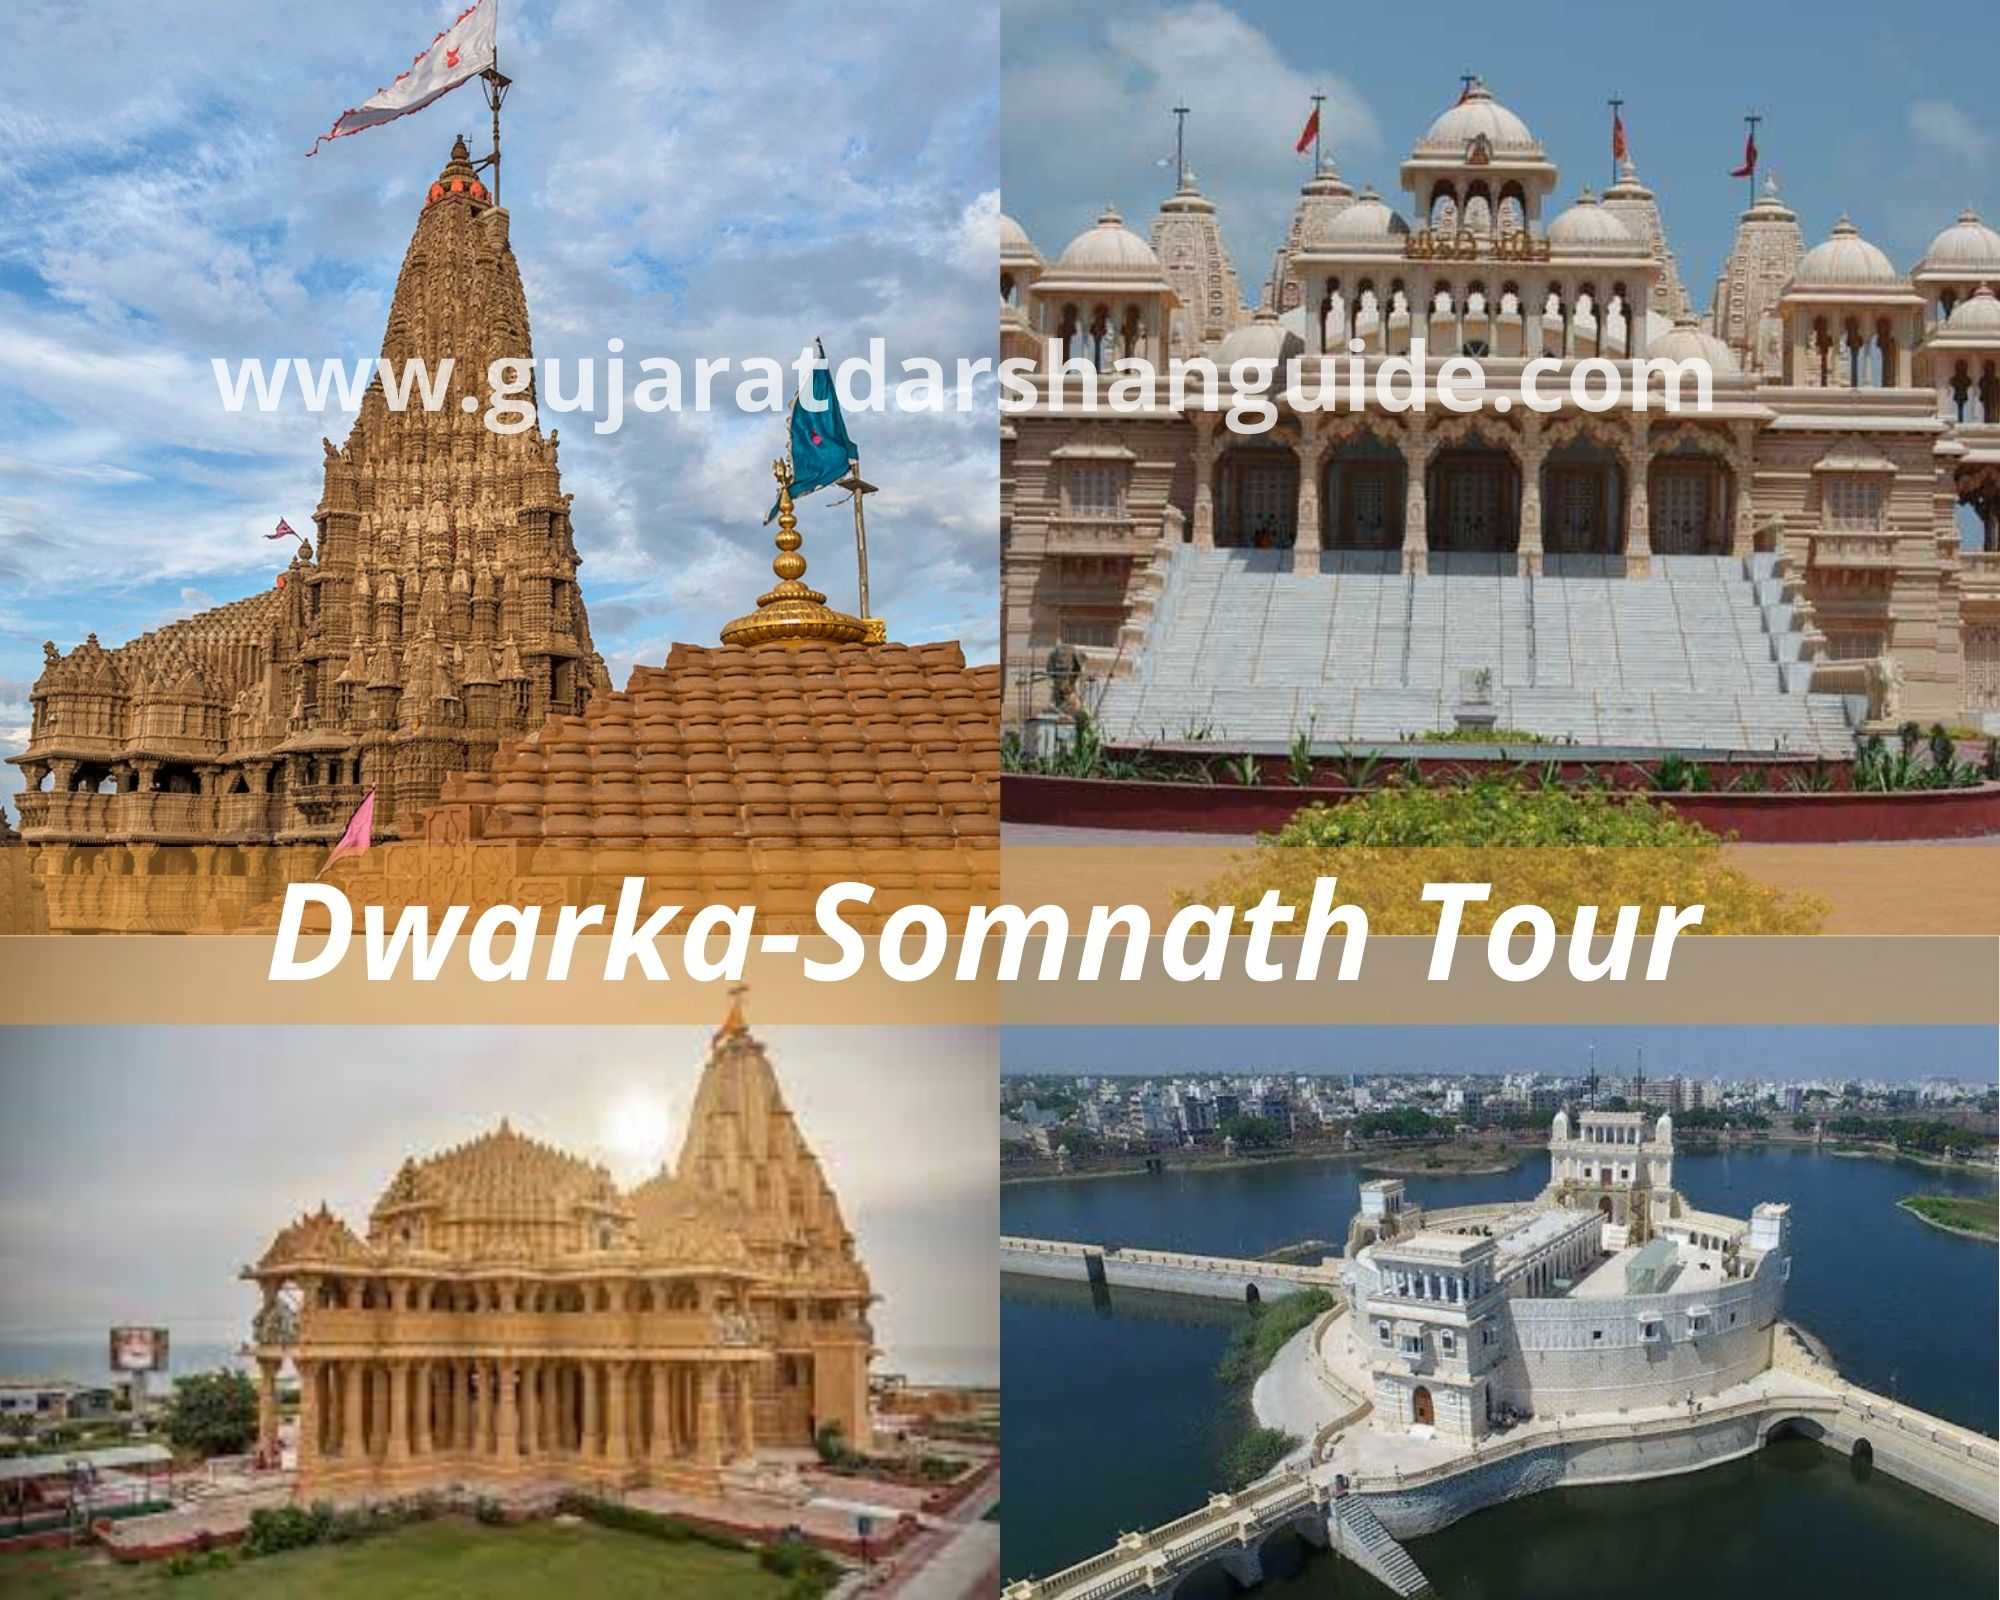 Dwarka-Somnath Tour